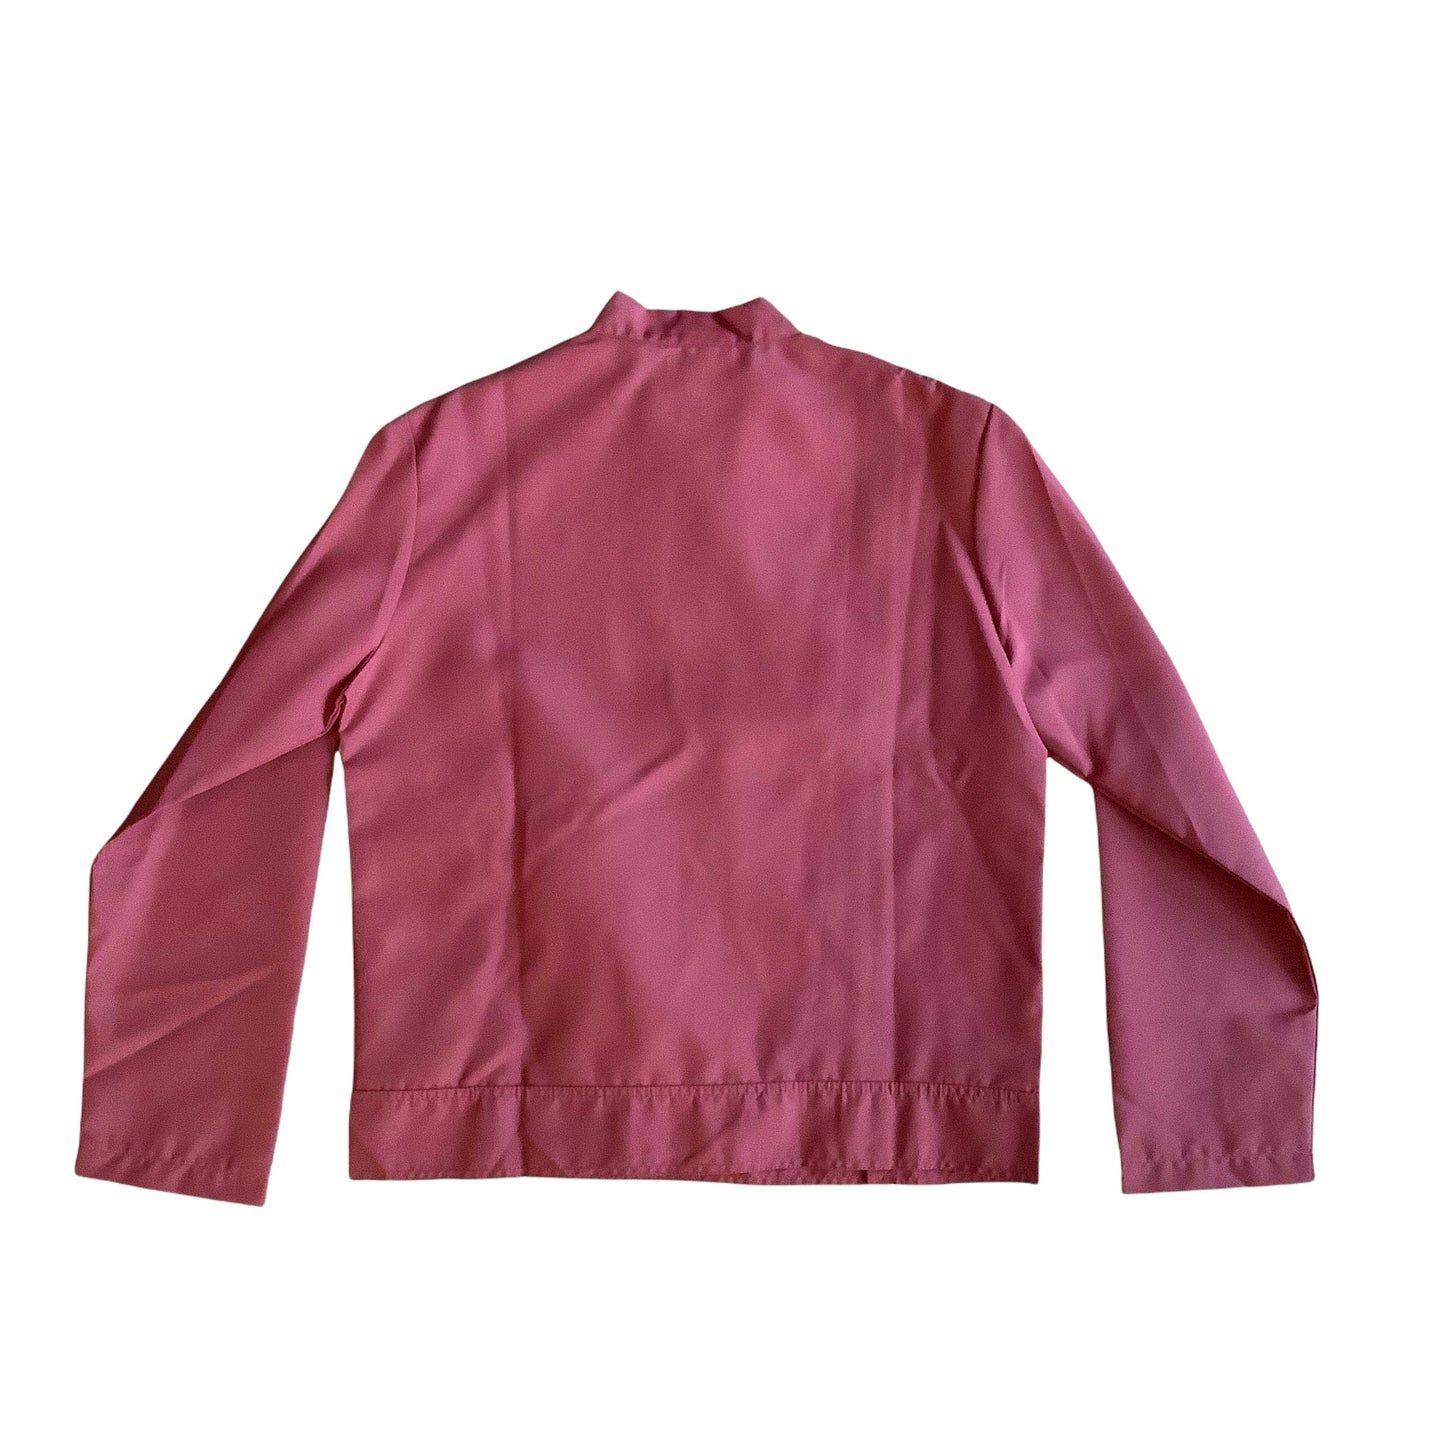 Vintage 1960s Dark Red  School Nylon Shirt / Blouse  8-10Y